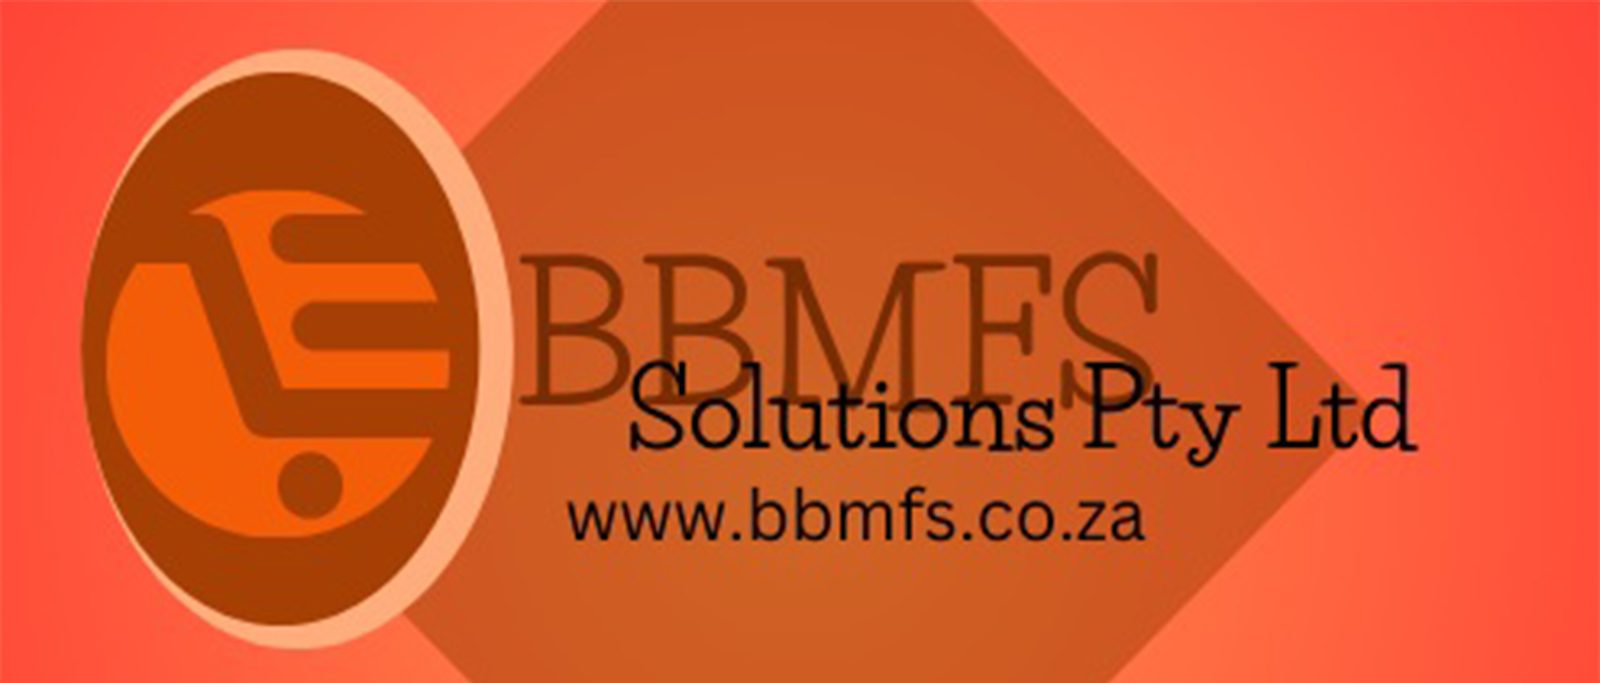 BBMFS Solutions